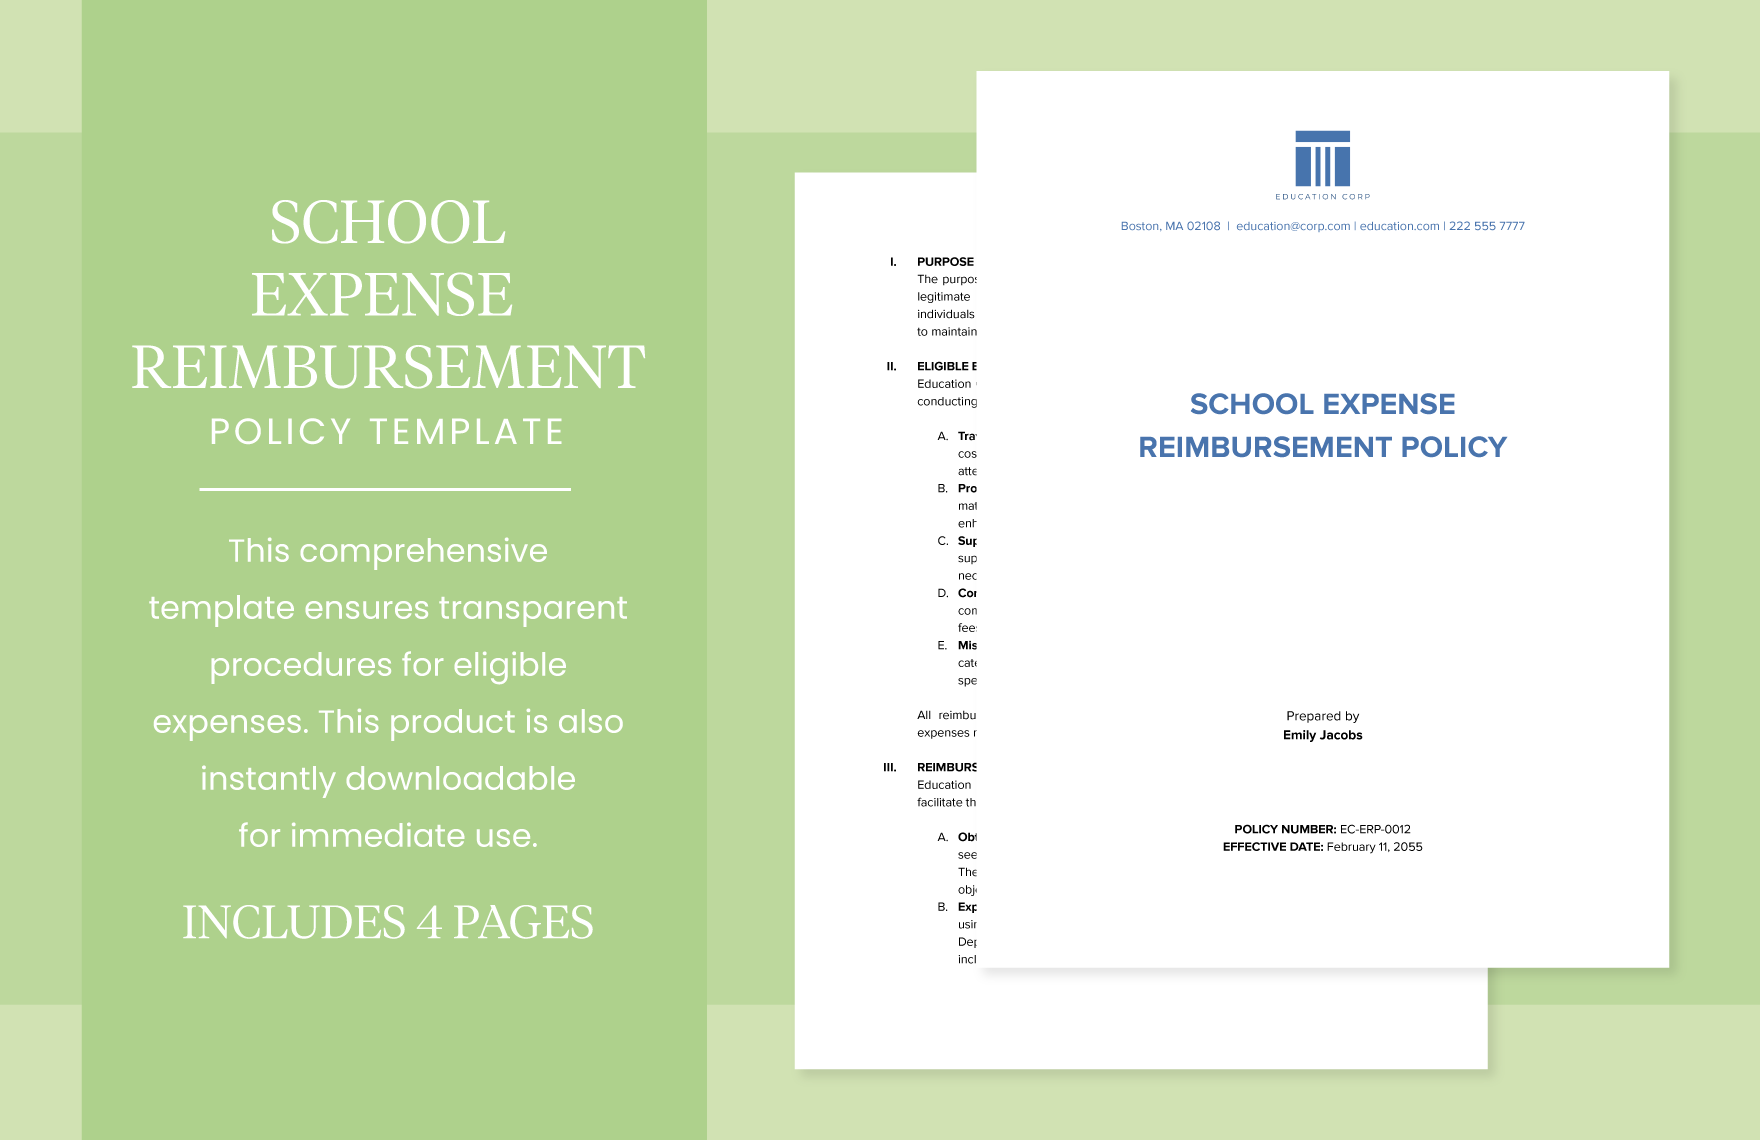 School Expense Reimbursement Policy Template in Word, Google Docs, PDF